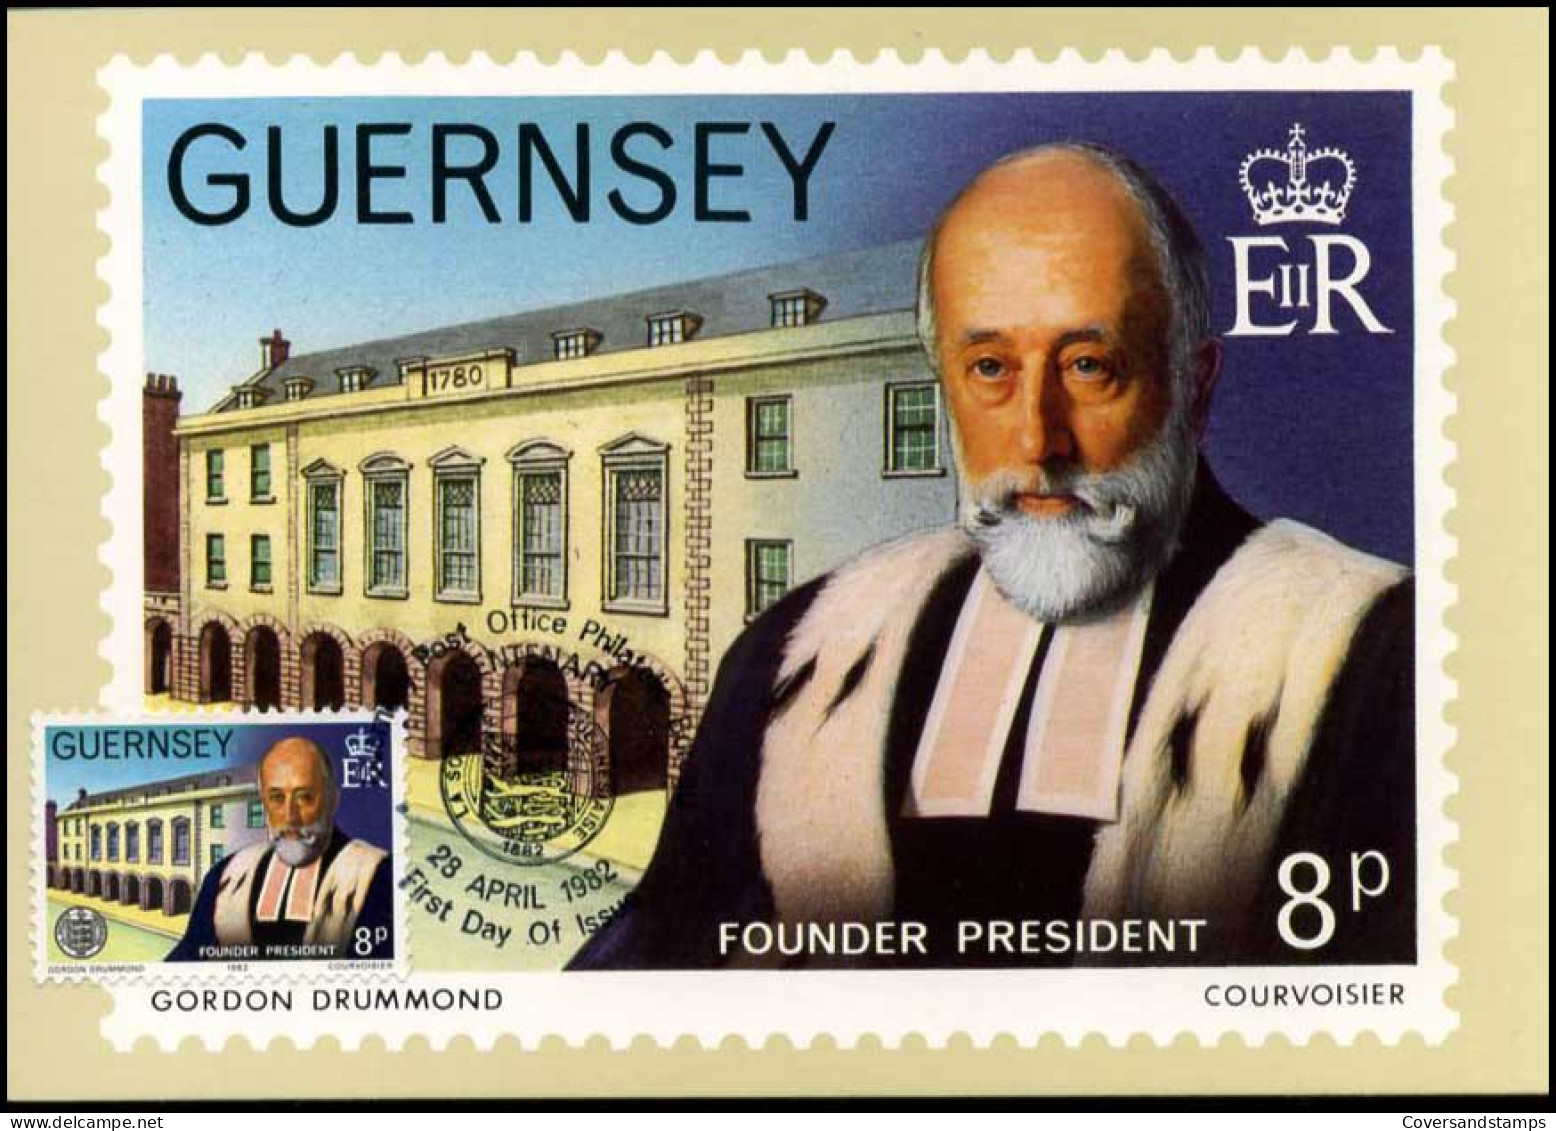  Guernsey - MK -  Europa - Guernesey